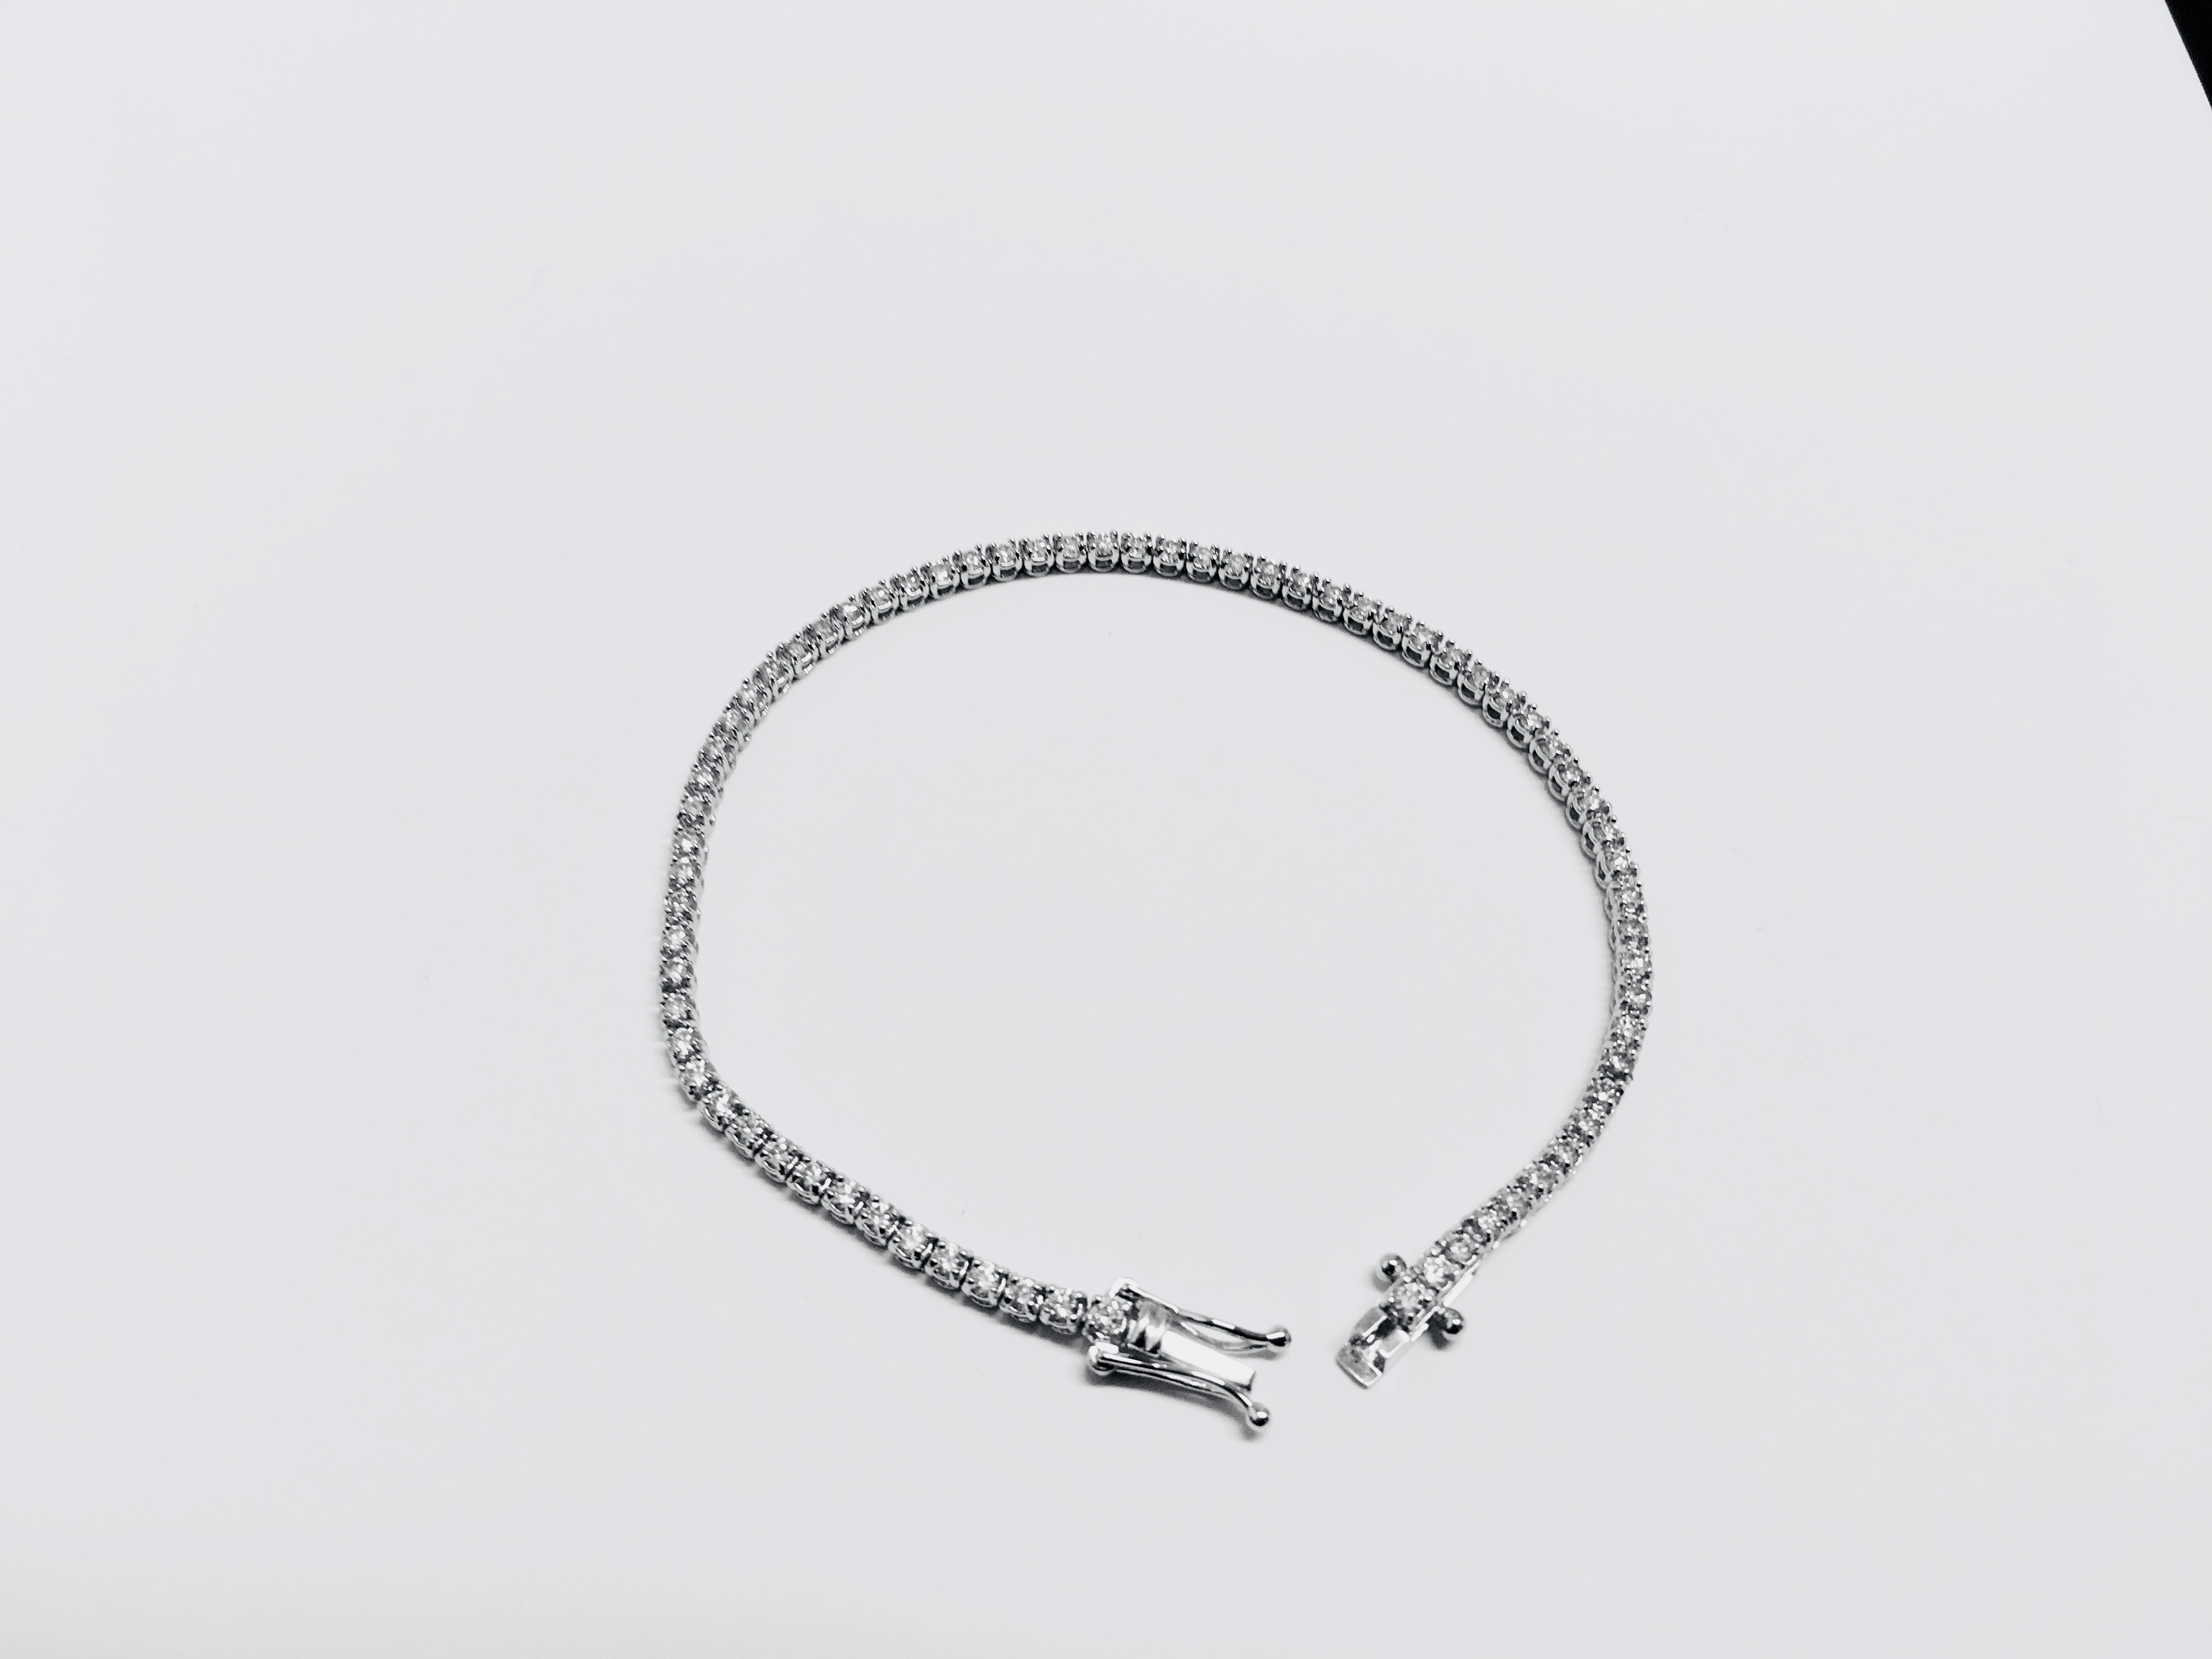 2.10ct diamond tennis bracelet with 70 brilliant cut diamonds - Image 17 of 28